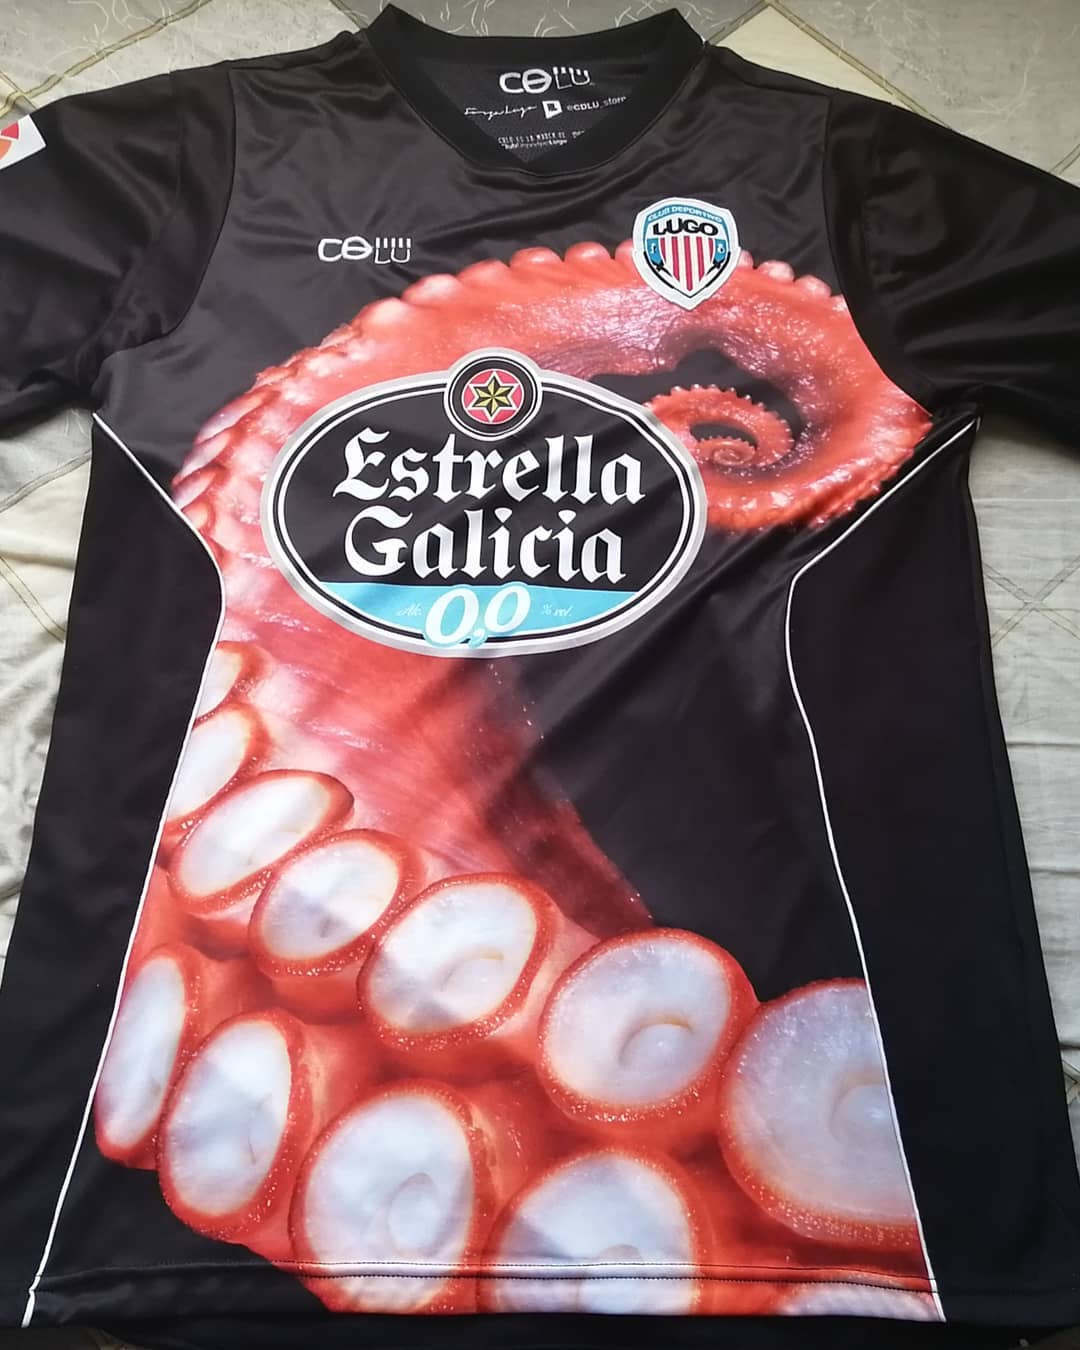 CD Lugo Pre-Season Goalkeeper 2014/2015 Football Shirt. BNWT. Medium. Club Football Shirts.